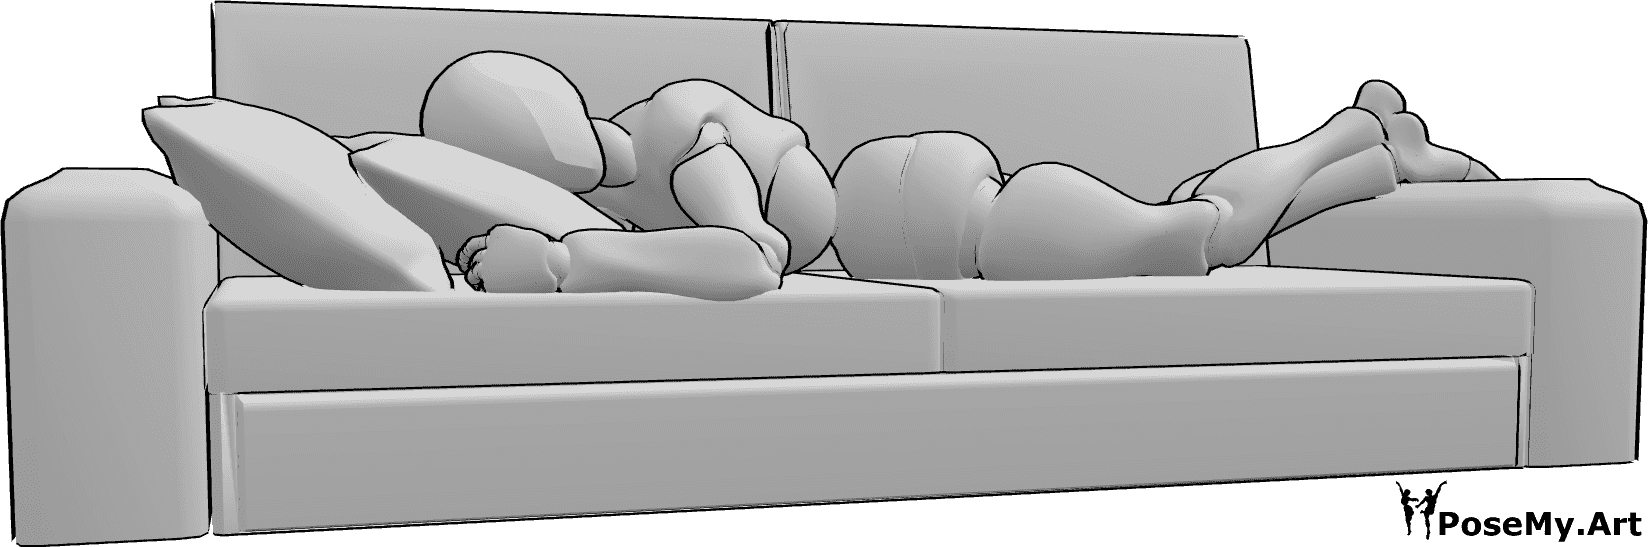 Pose Reference - Sleeping stomach sofa pose - Female is lying on her stomach, sleeping on sofa